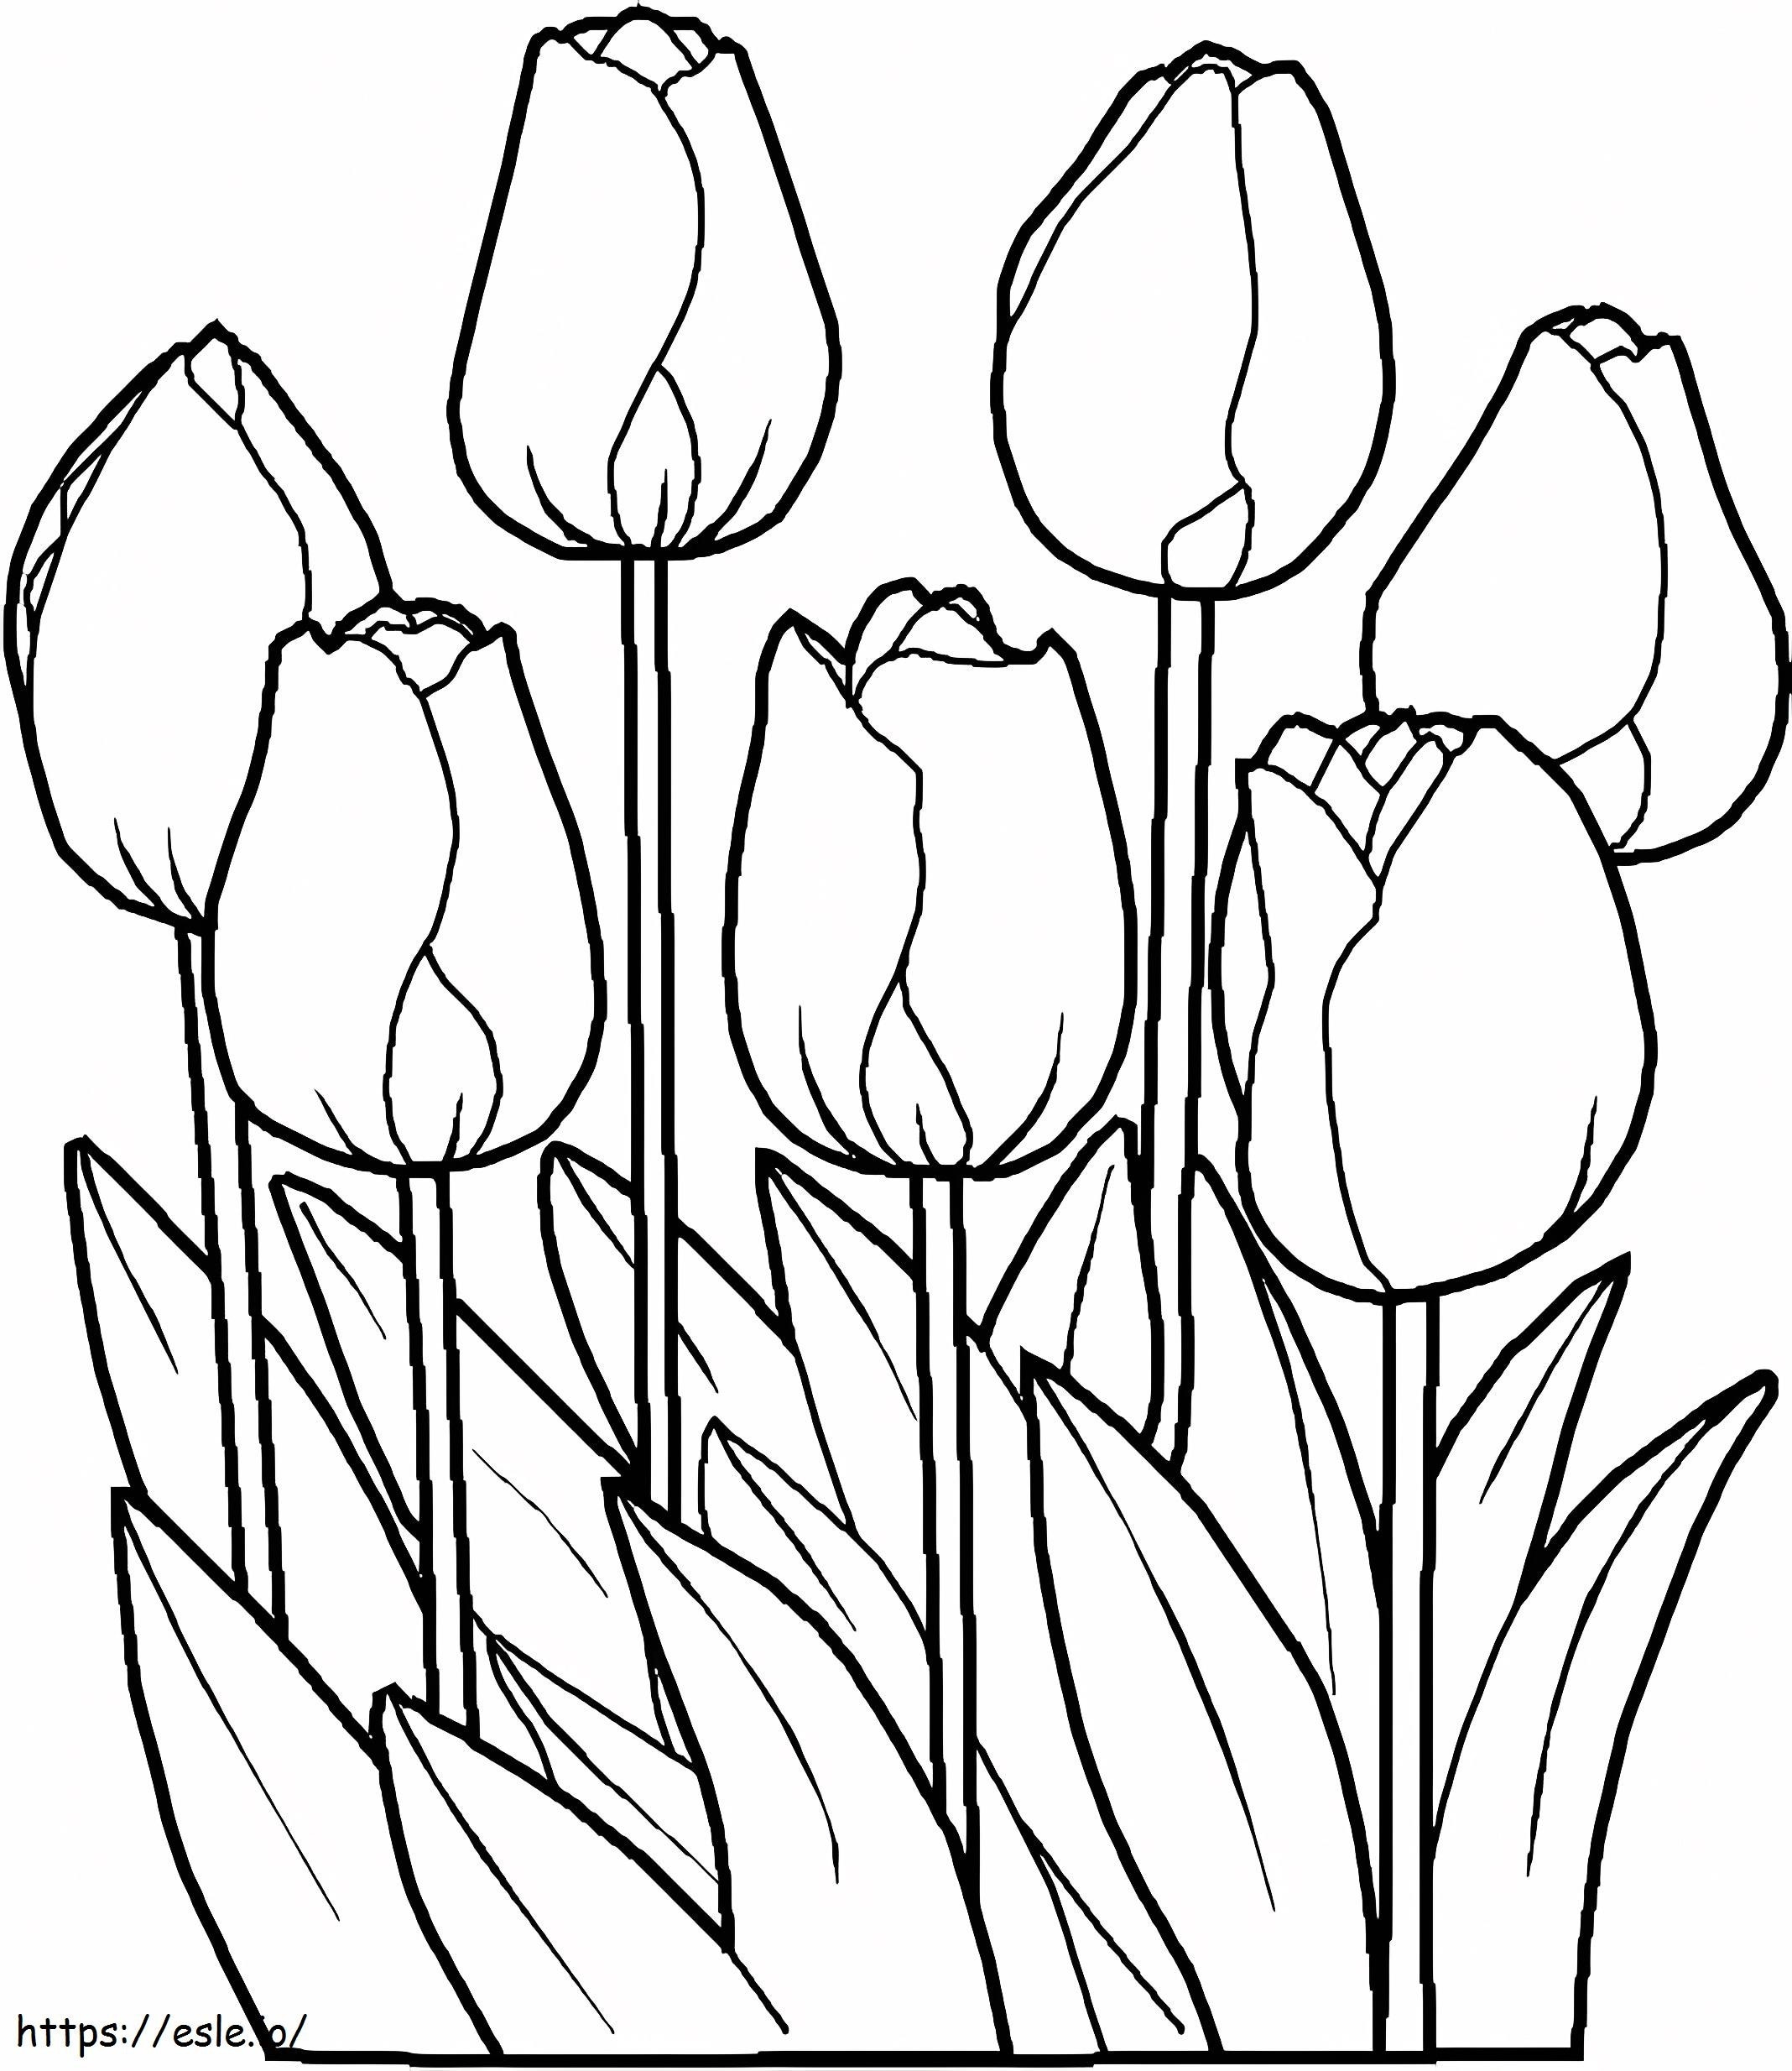 Coloriage Tulipe parfaite à imprimer dessin